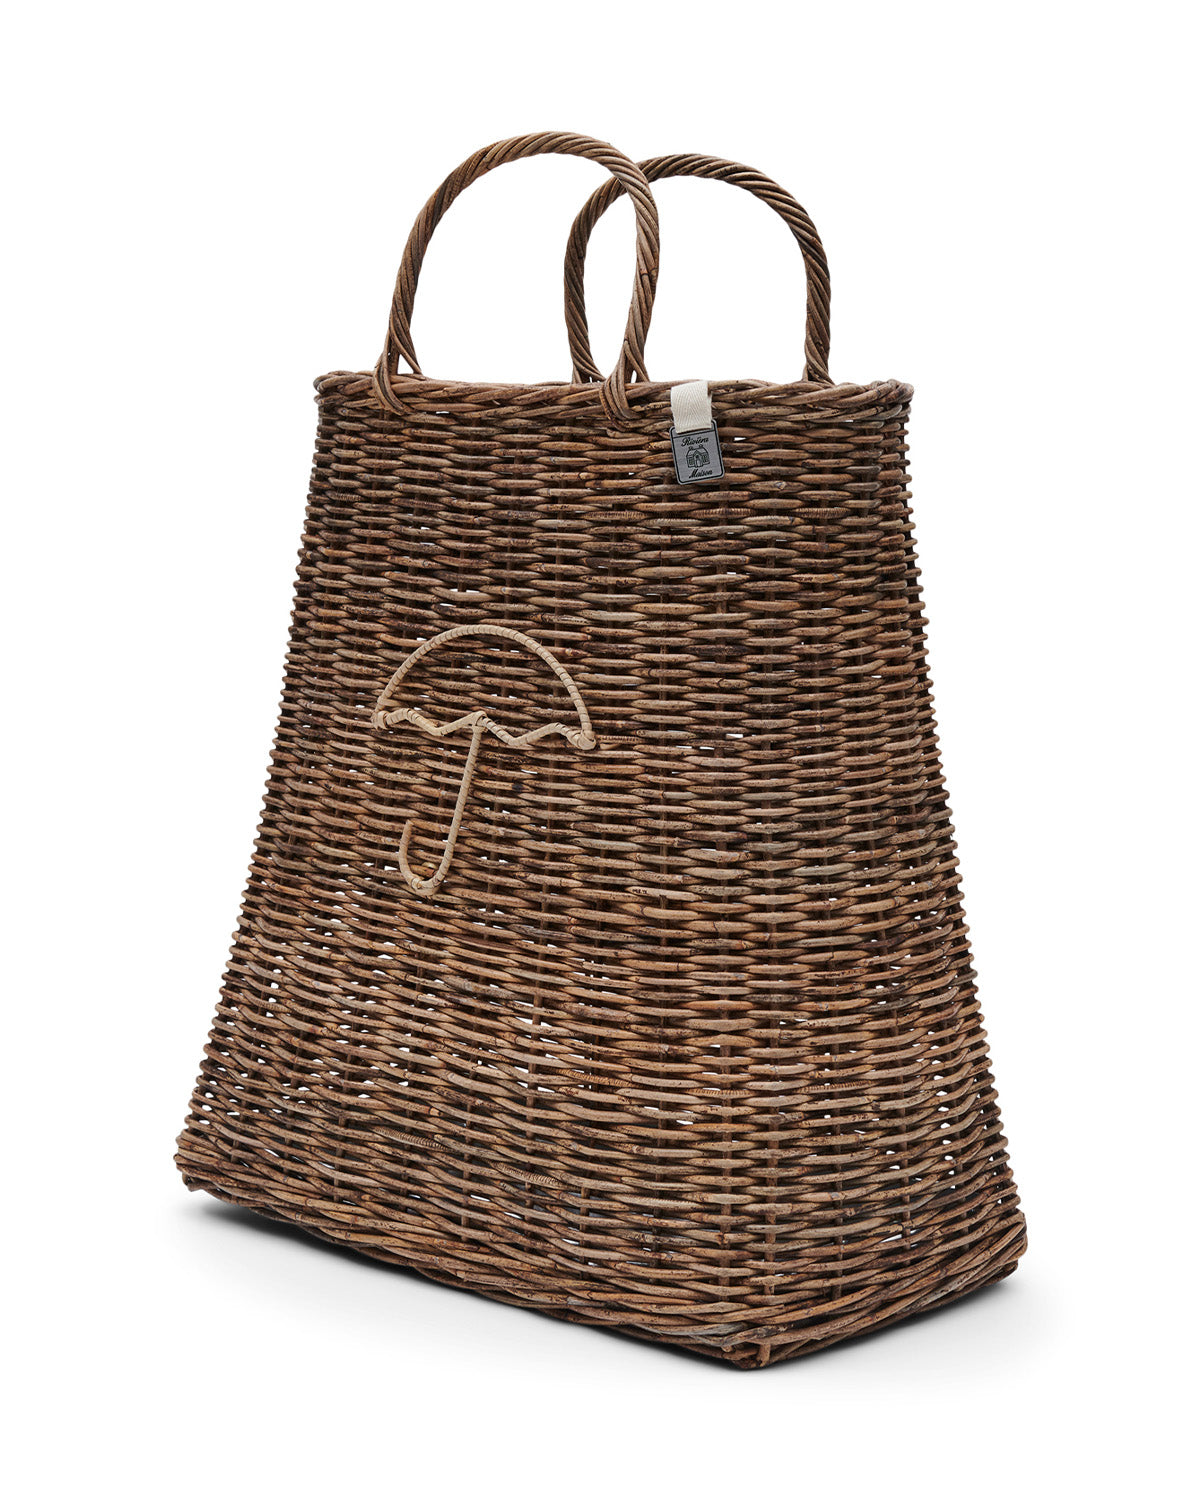 UMBRELLA BAG handmade from braided rattan by Riviera Maison